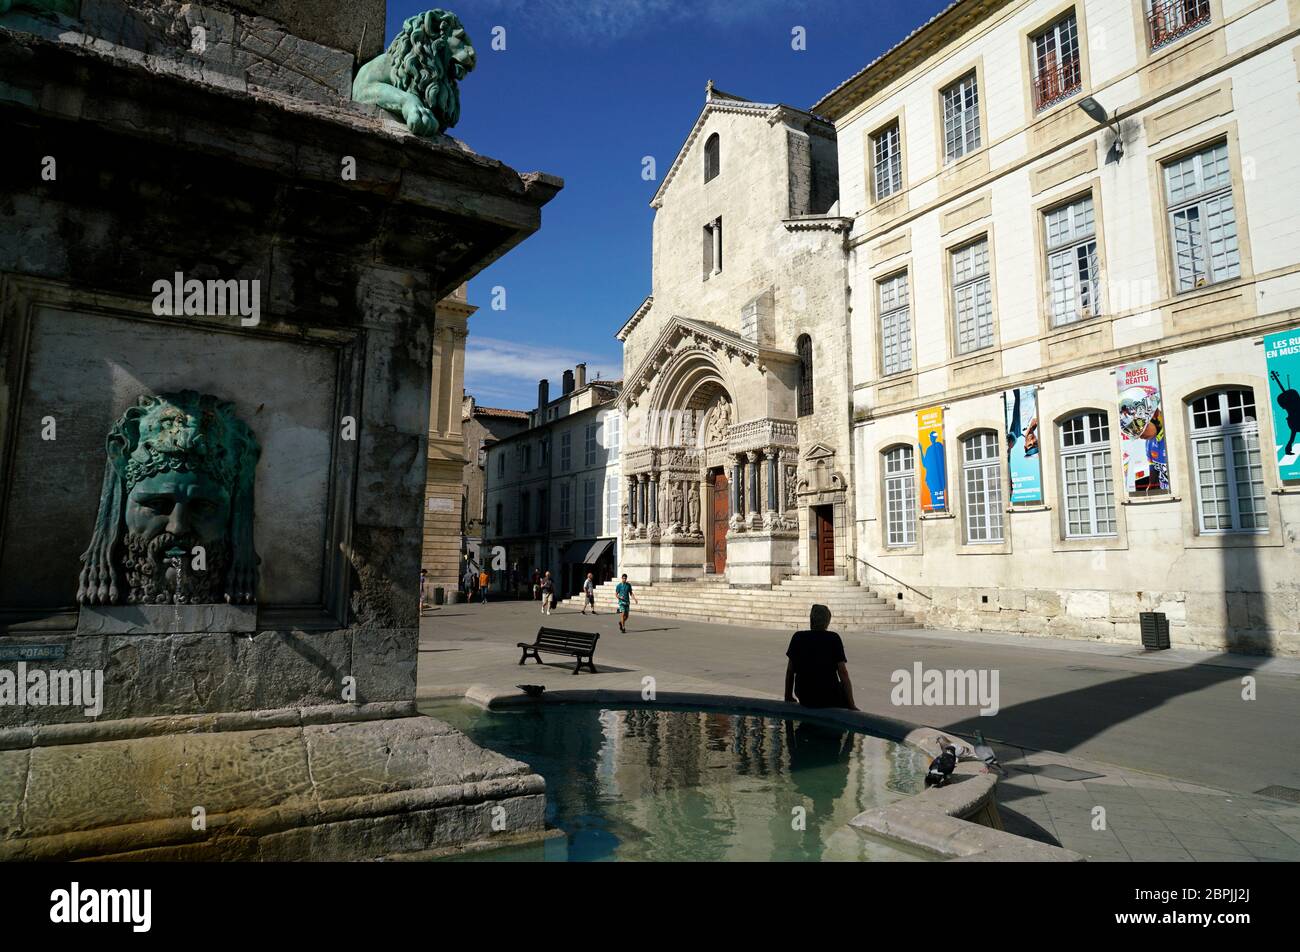 Der Brunnen des 4. Jahrhunderts Arles Obelisk in Place de la Republique mit der Kathedrale von St. Trophime im Hintergrund.Arles.Provence-Alpes-Cote d'Azur.Frankreich Stockfoto